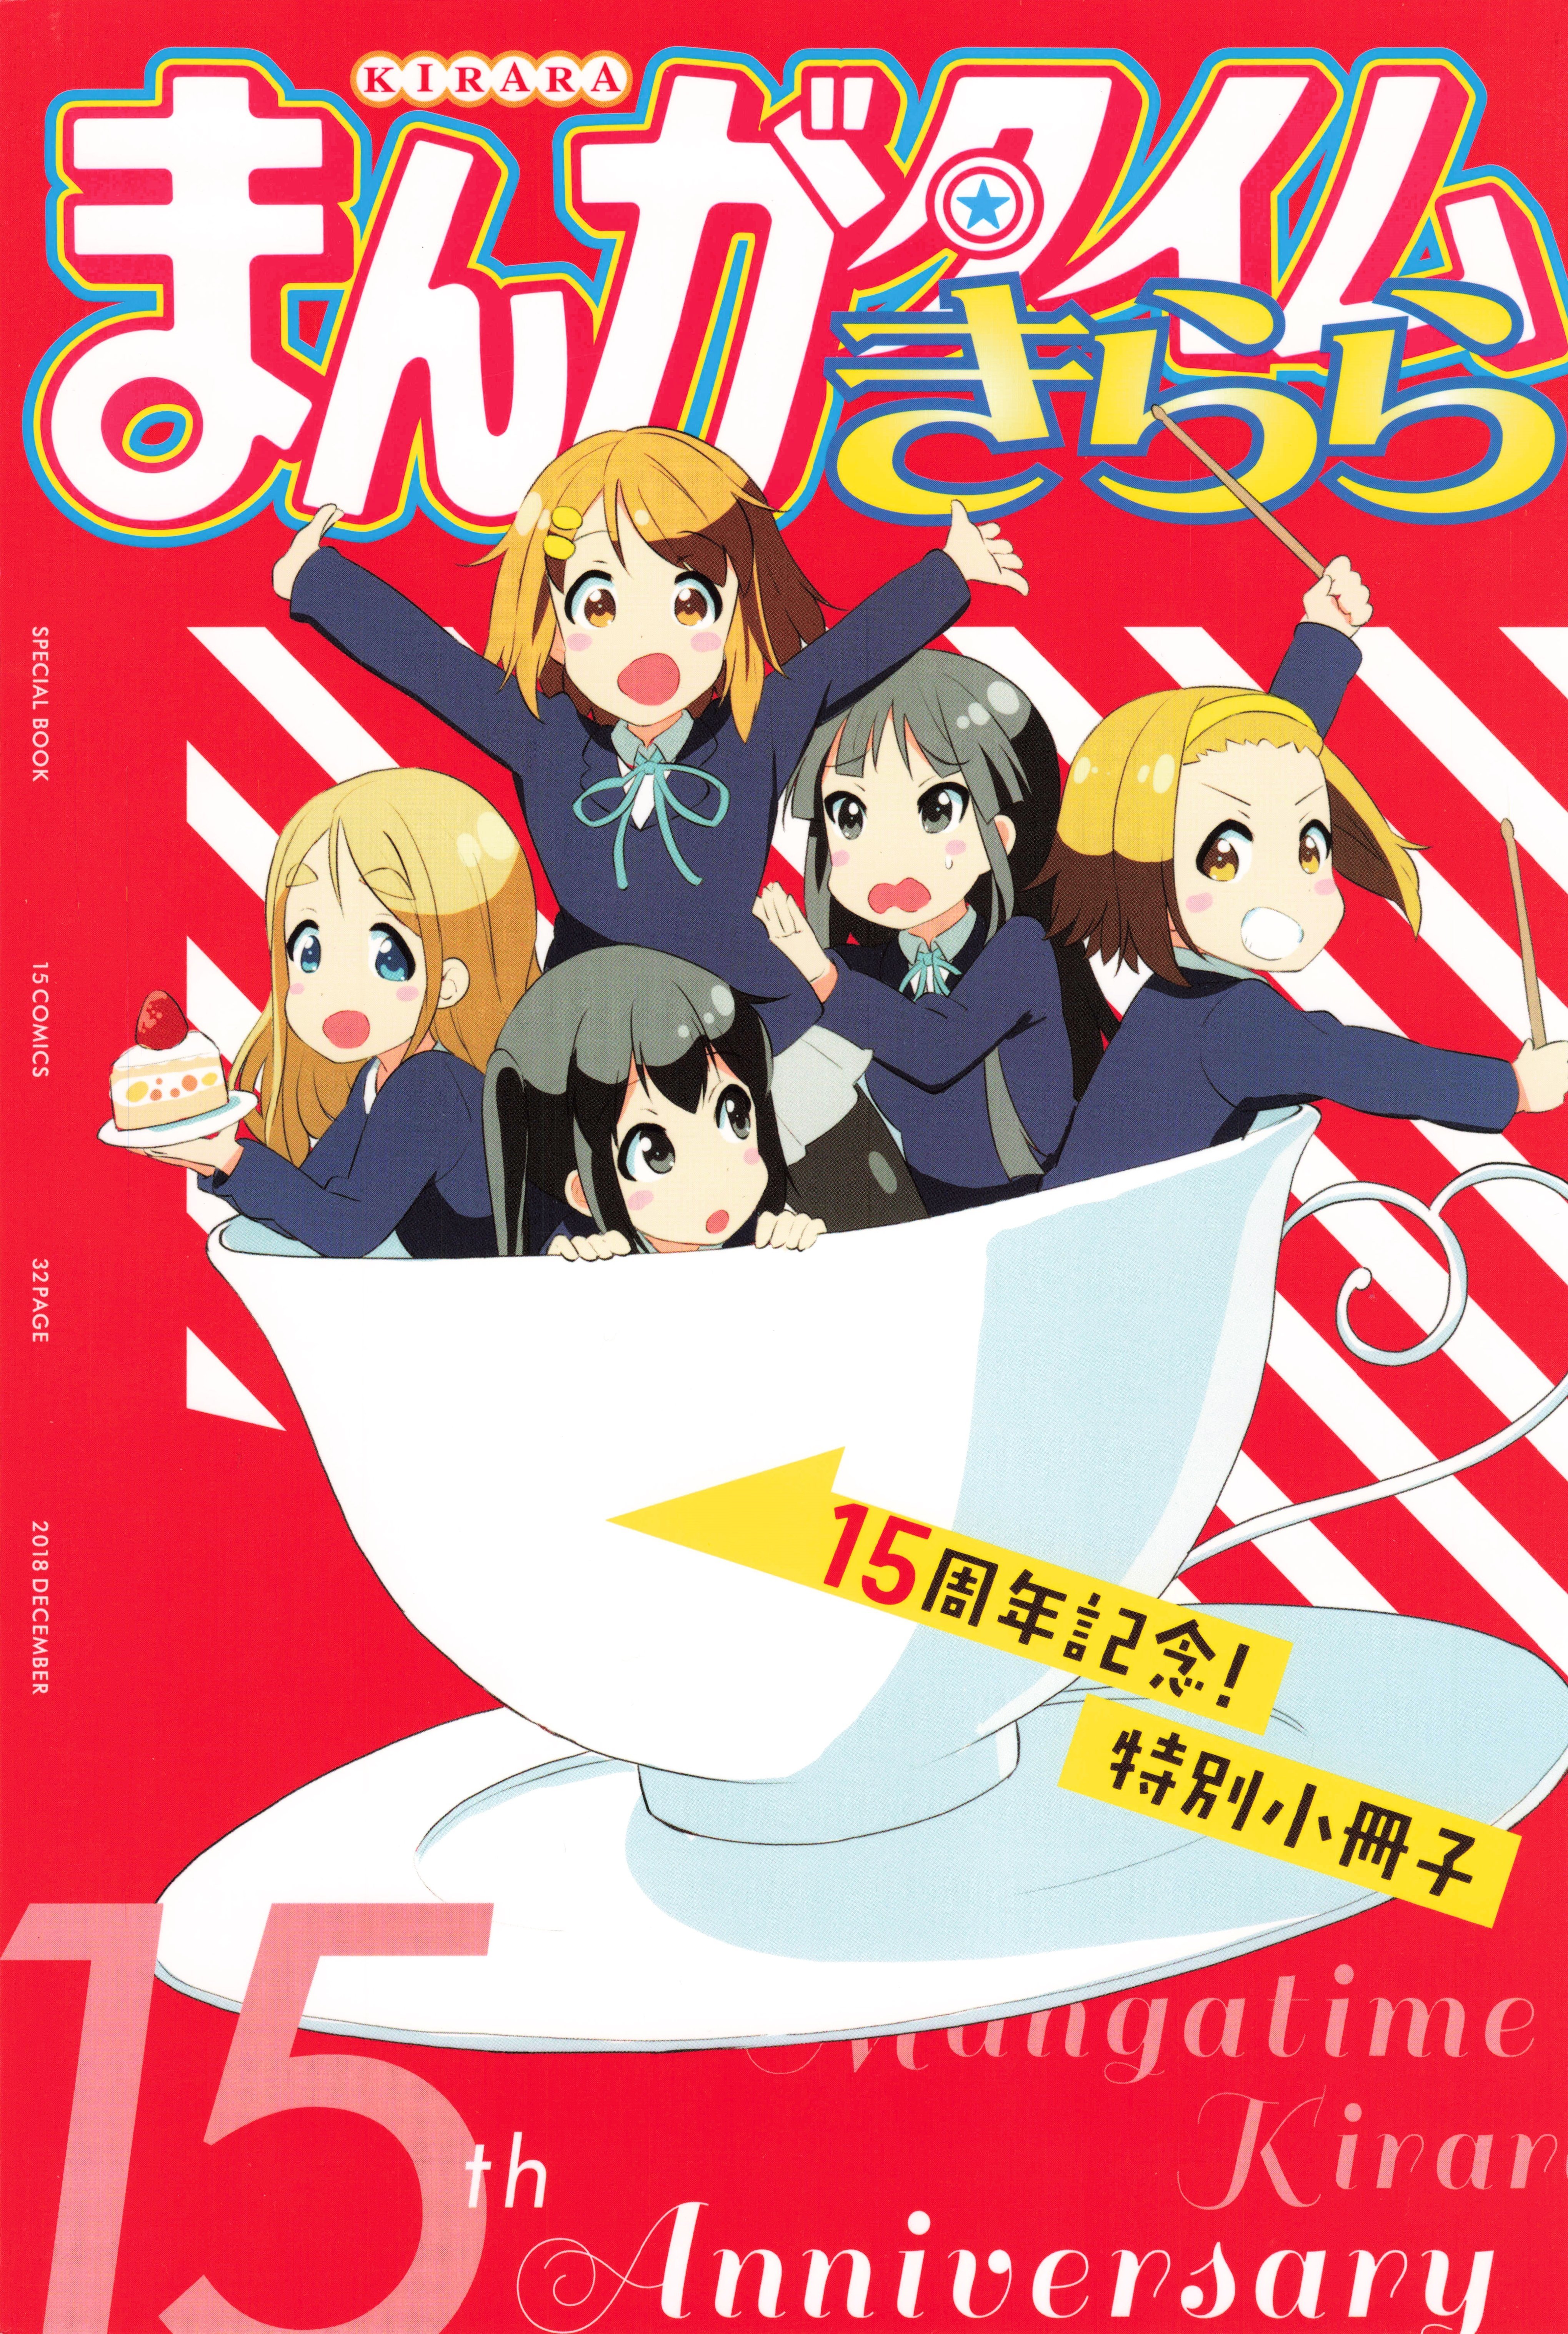 Manga time Kirara 15th Anniversary Special Book cover 0